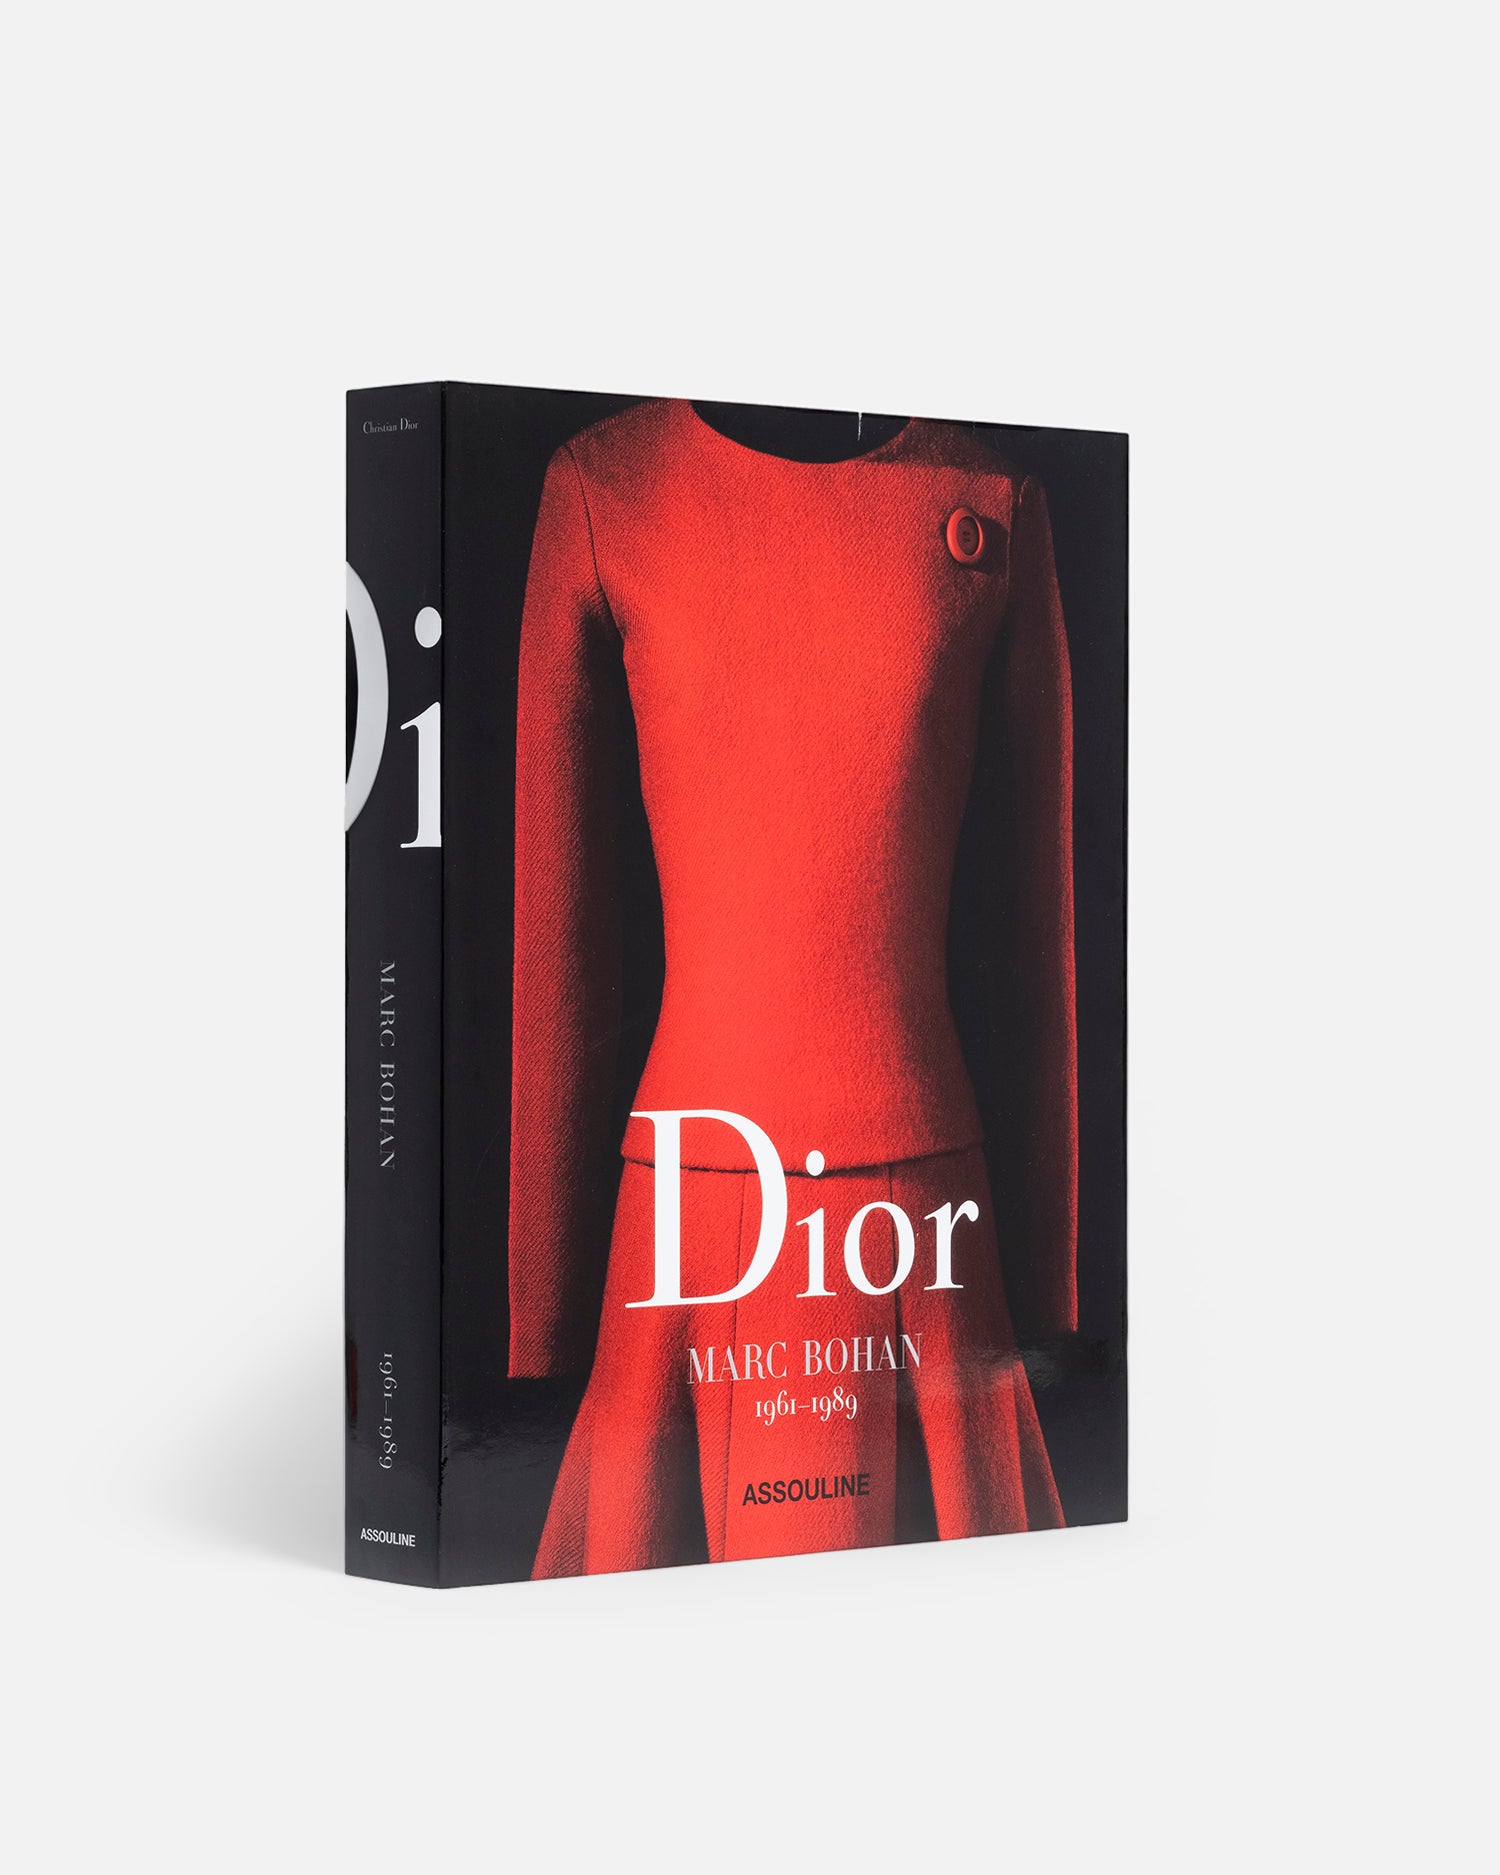 Dior by Christian Dior book by Olivier Saillard | ASSOULINE